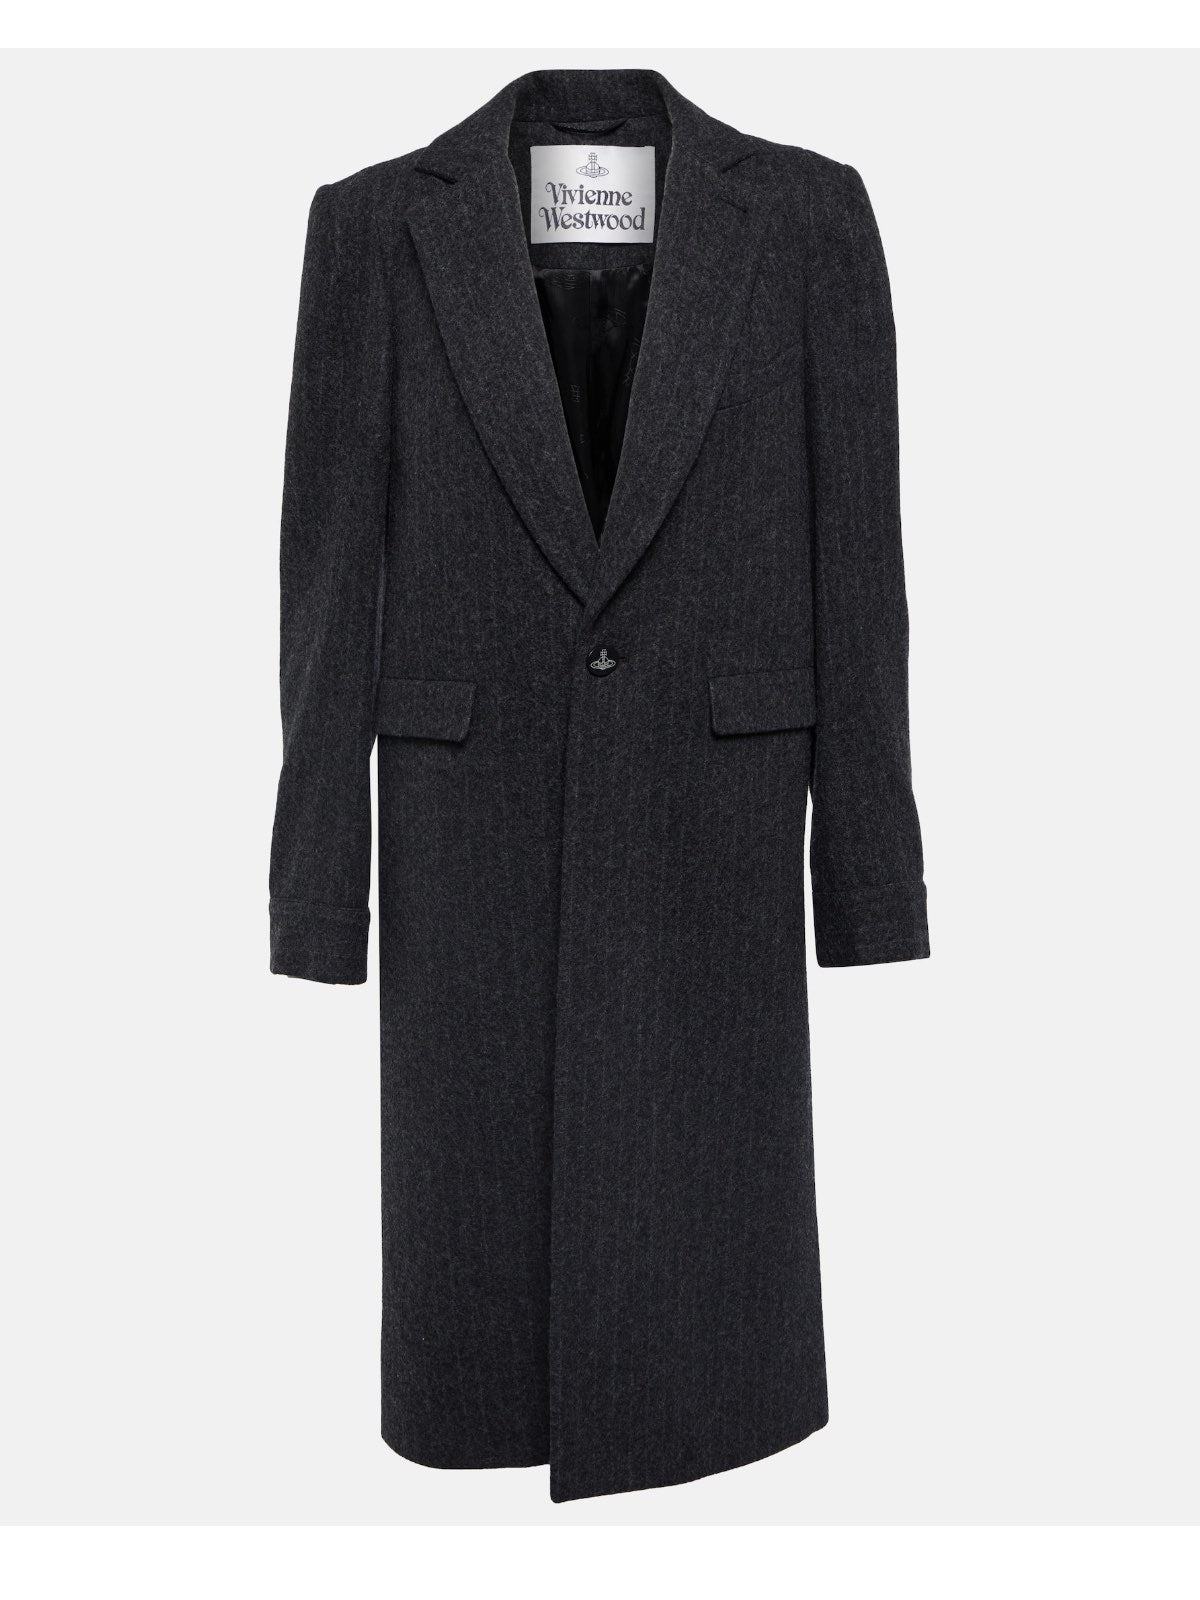 Vivienne Westwood Alien Teddy Coat in Black Bowns Cambridge – bowns ...